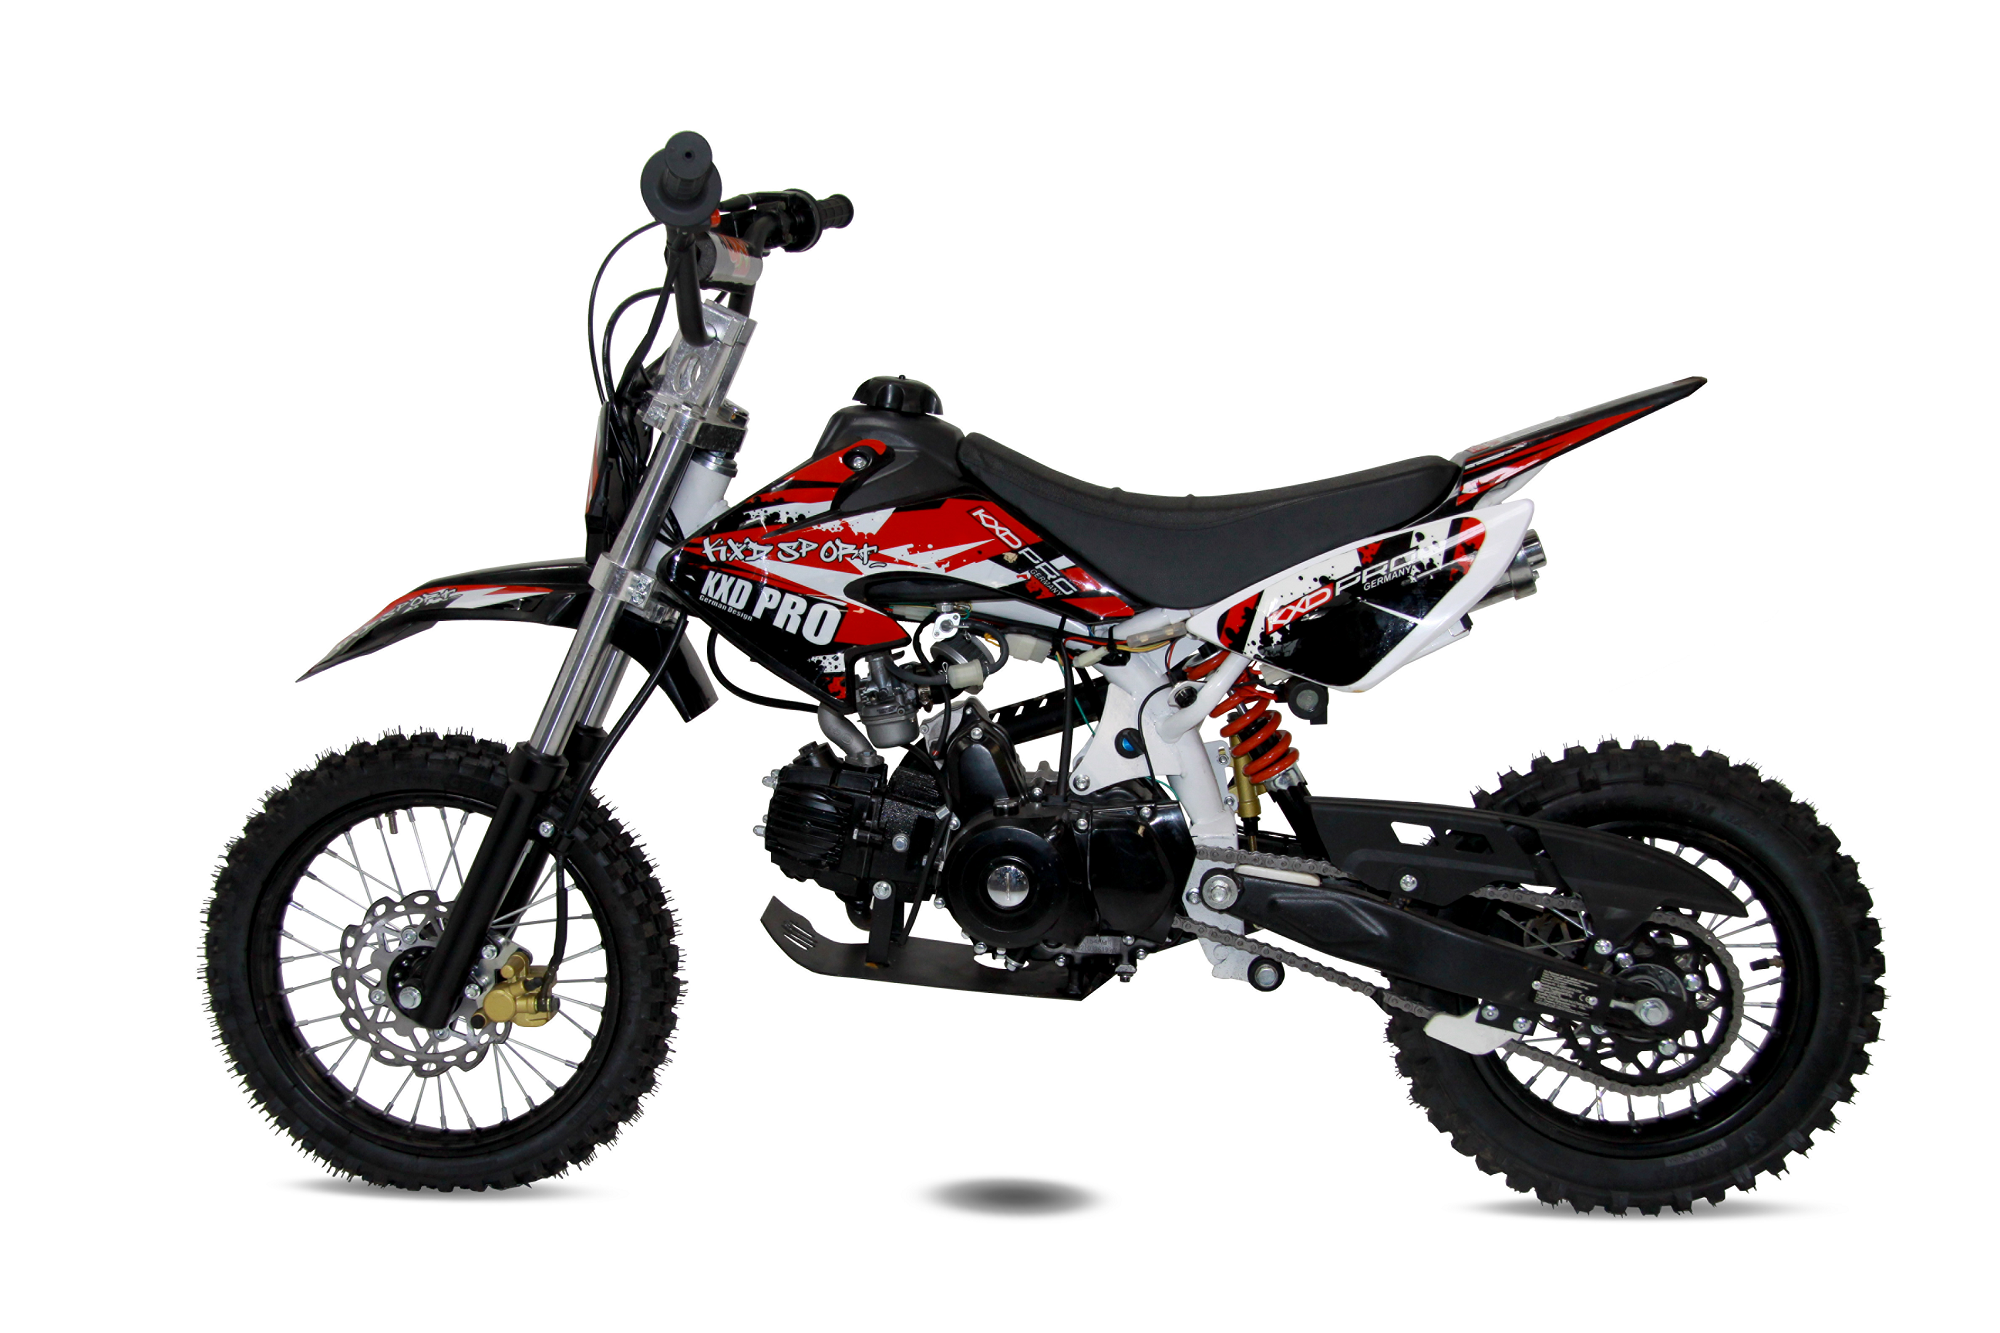 Motocicleta cross copii kxd 125cc db 607a, 4t, roti 14/12", culoare negru/rosu, automatic